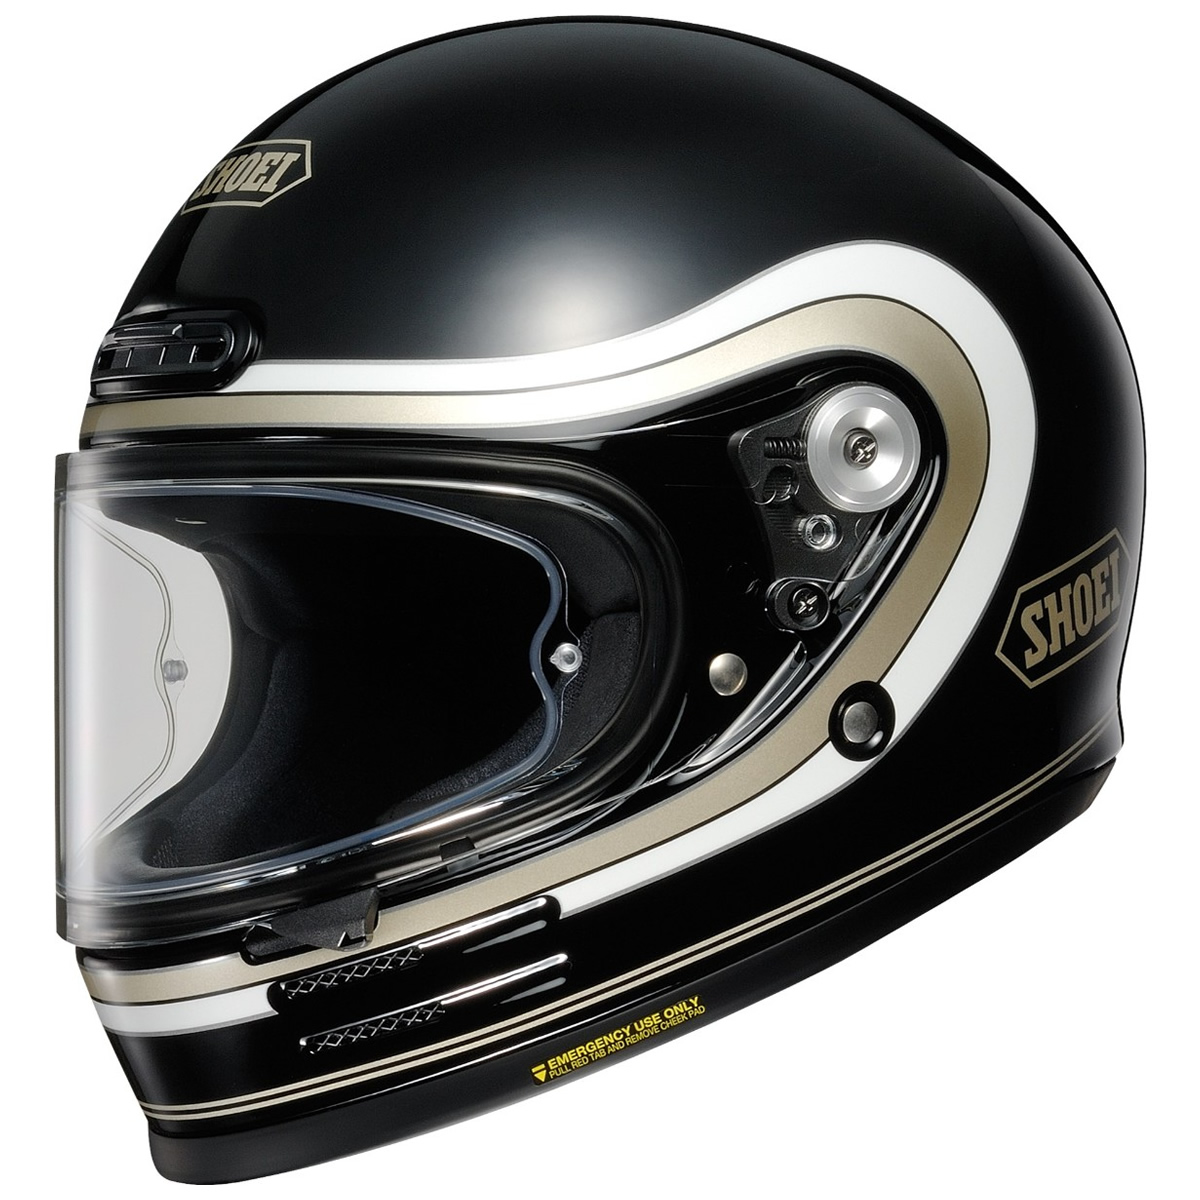 Shoei Helm Glamster 06 Bivouac, schwarz-weiß-gold